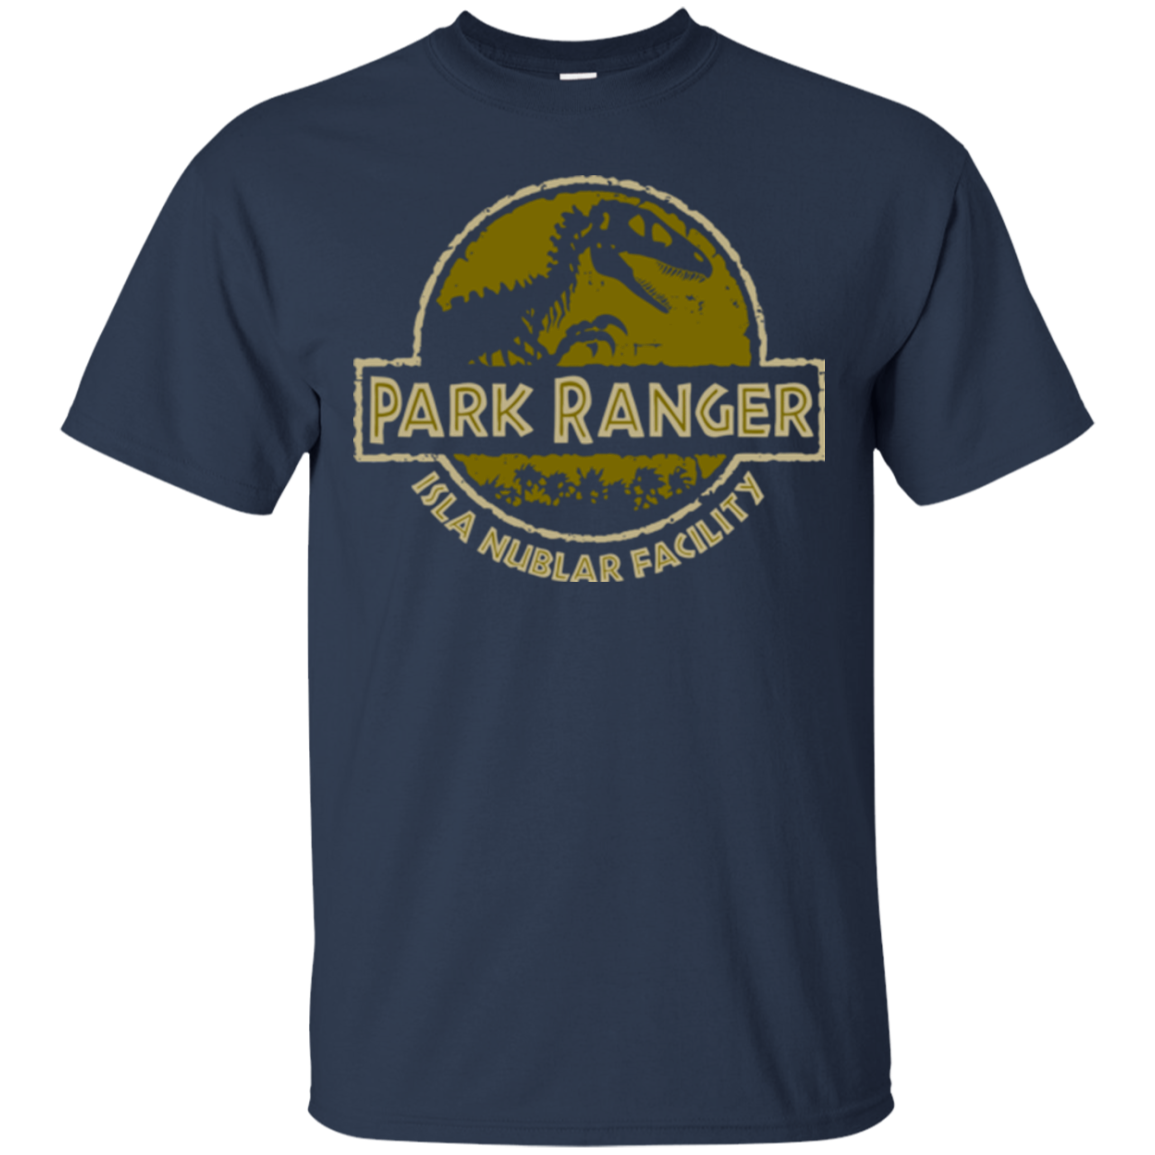 Parks and Rex T-Shirt